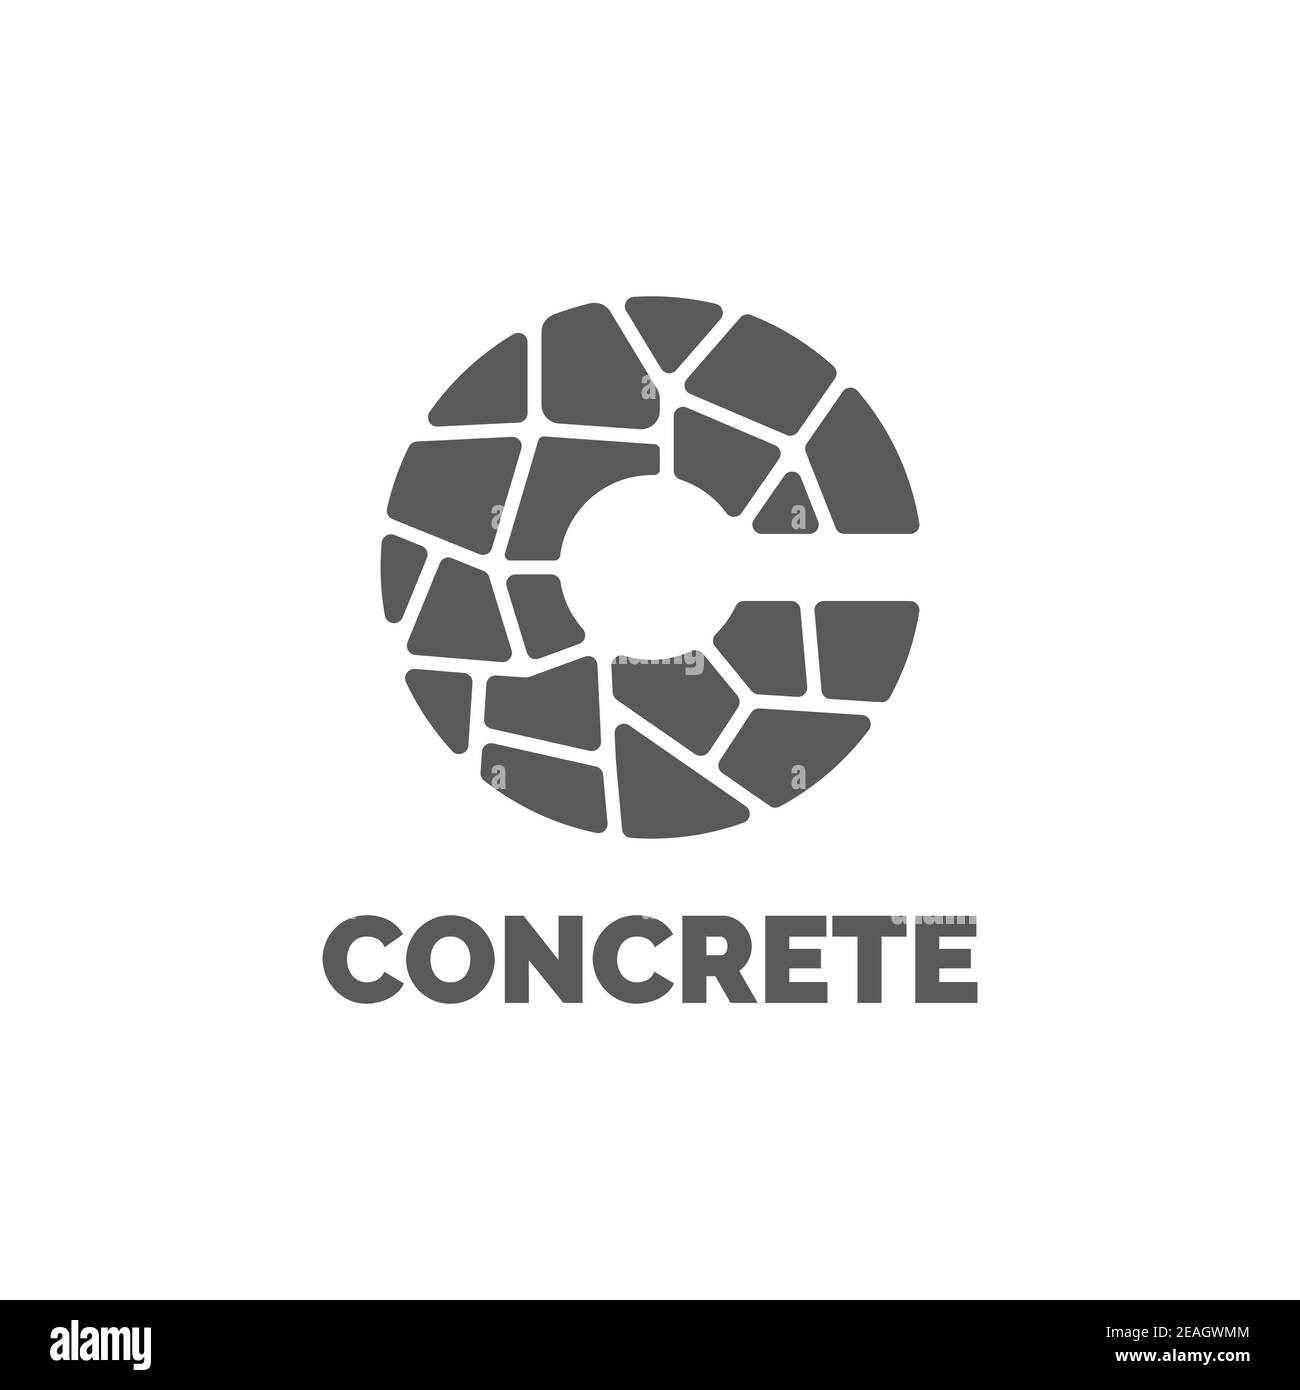 Concrete illustration logo design vector template. Construction icon with letter C shape Stock Vector